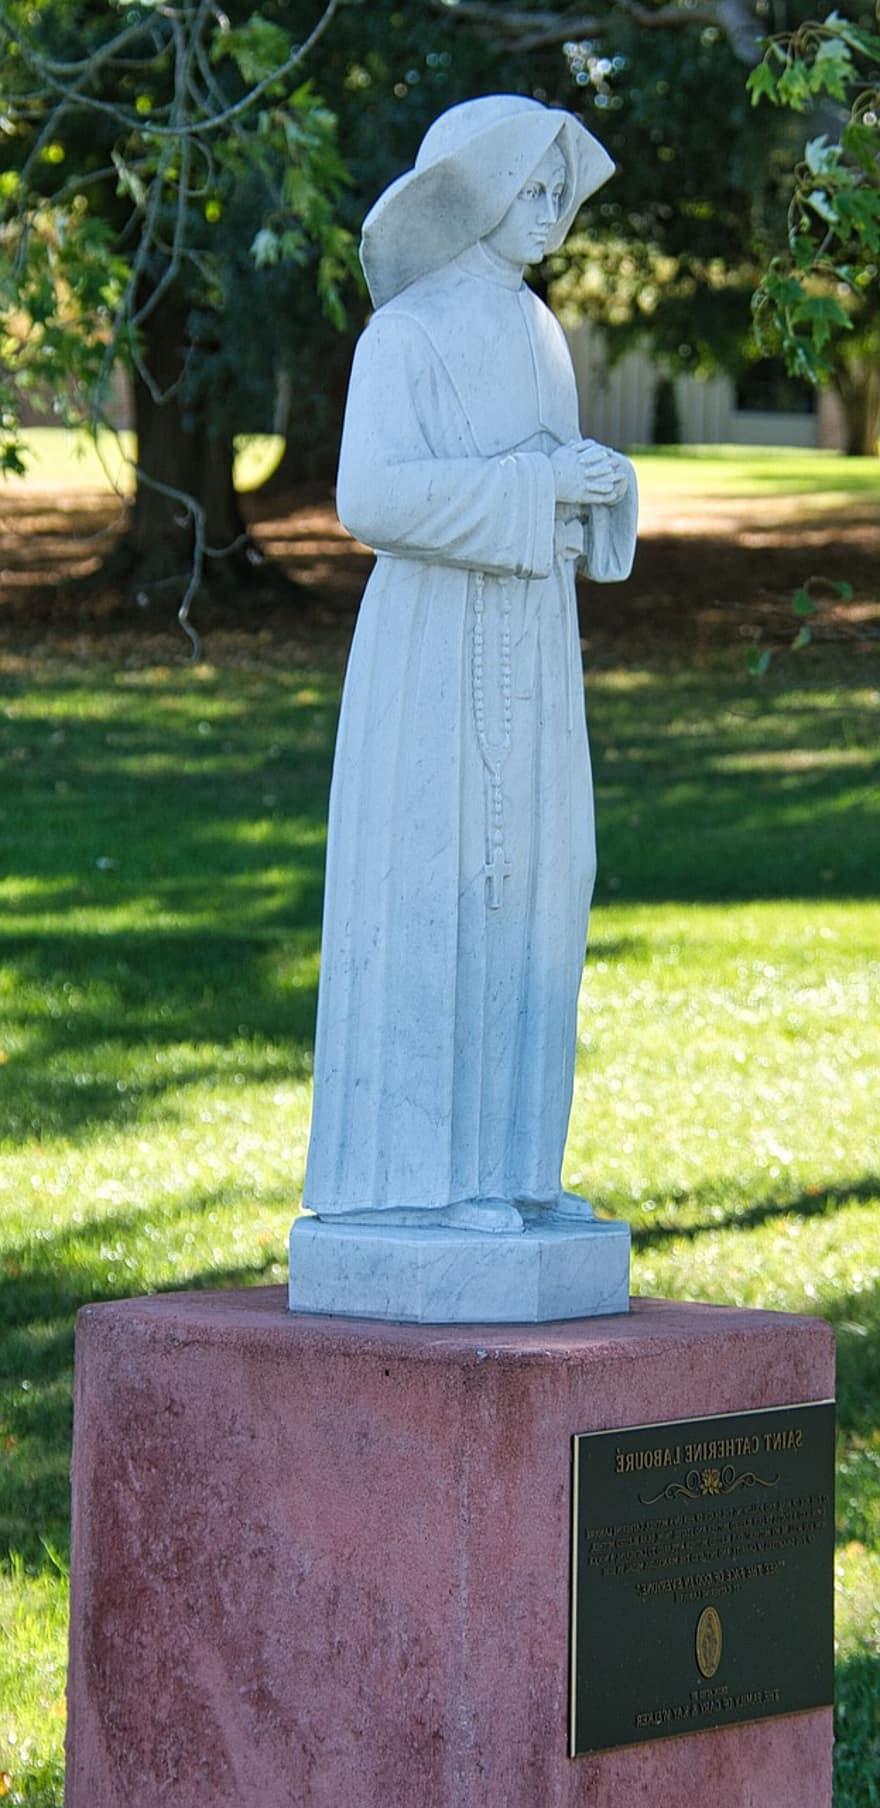 Saint Statue, Saint Sculpture, Religion, Religious Statue